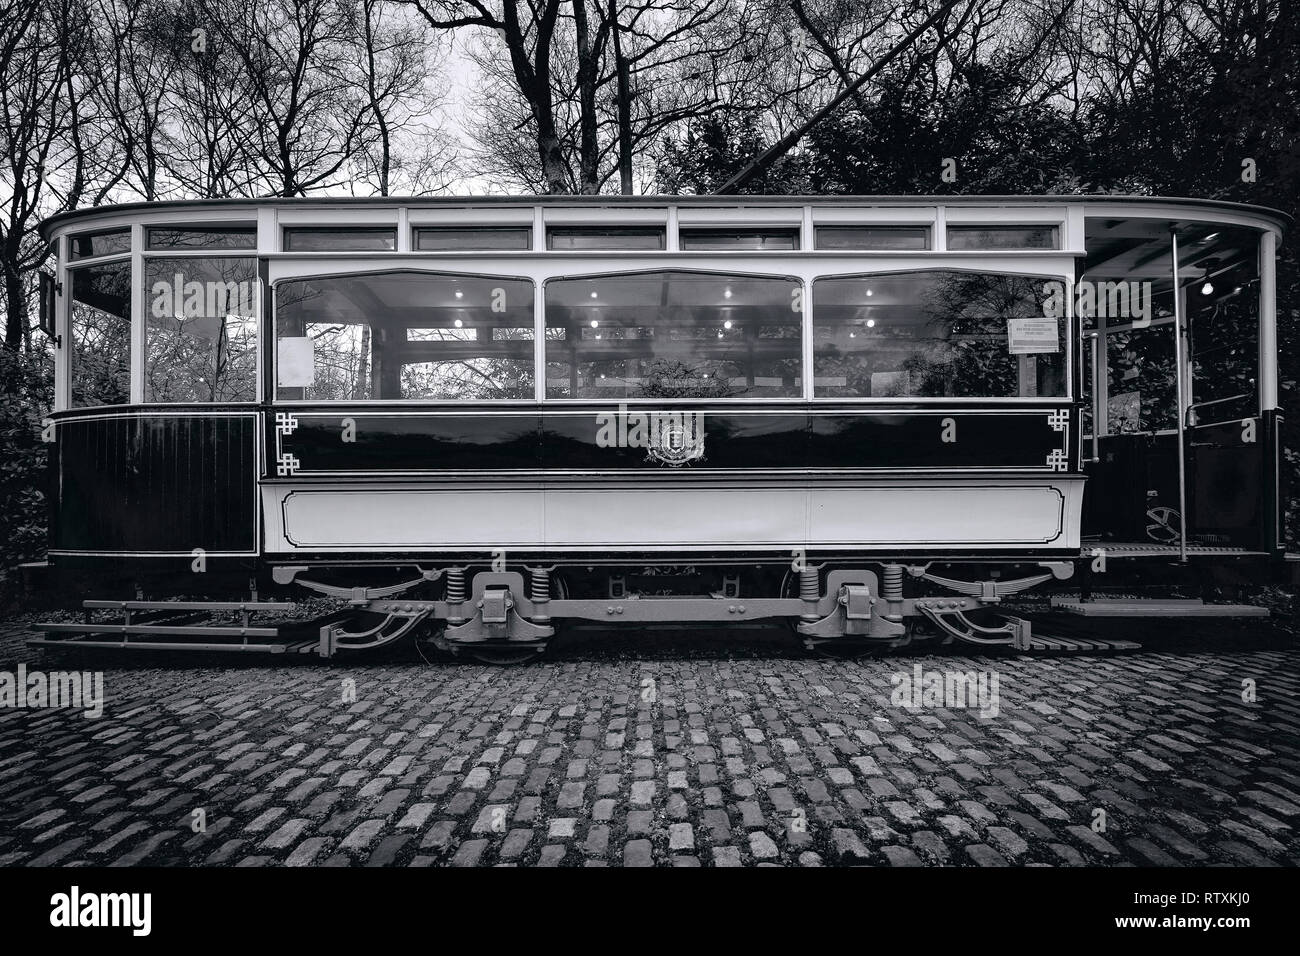 Restored Historic Tram at Heaton Park Tramway Museum Stock Photo